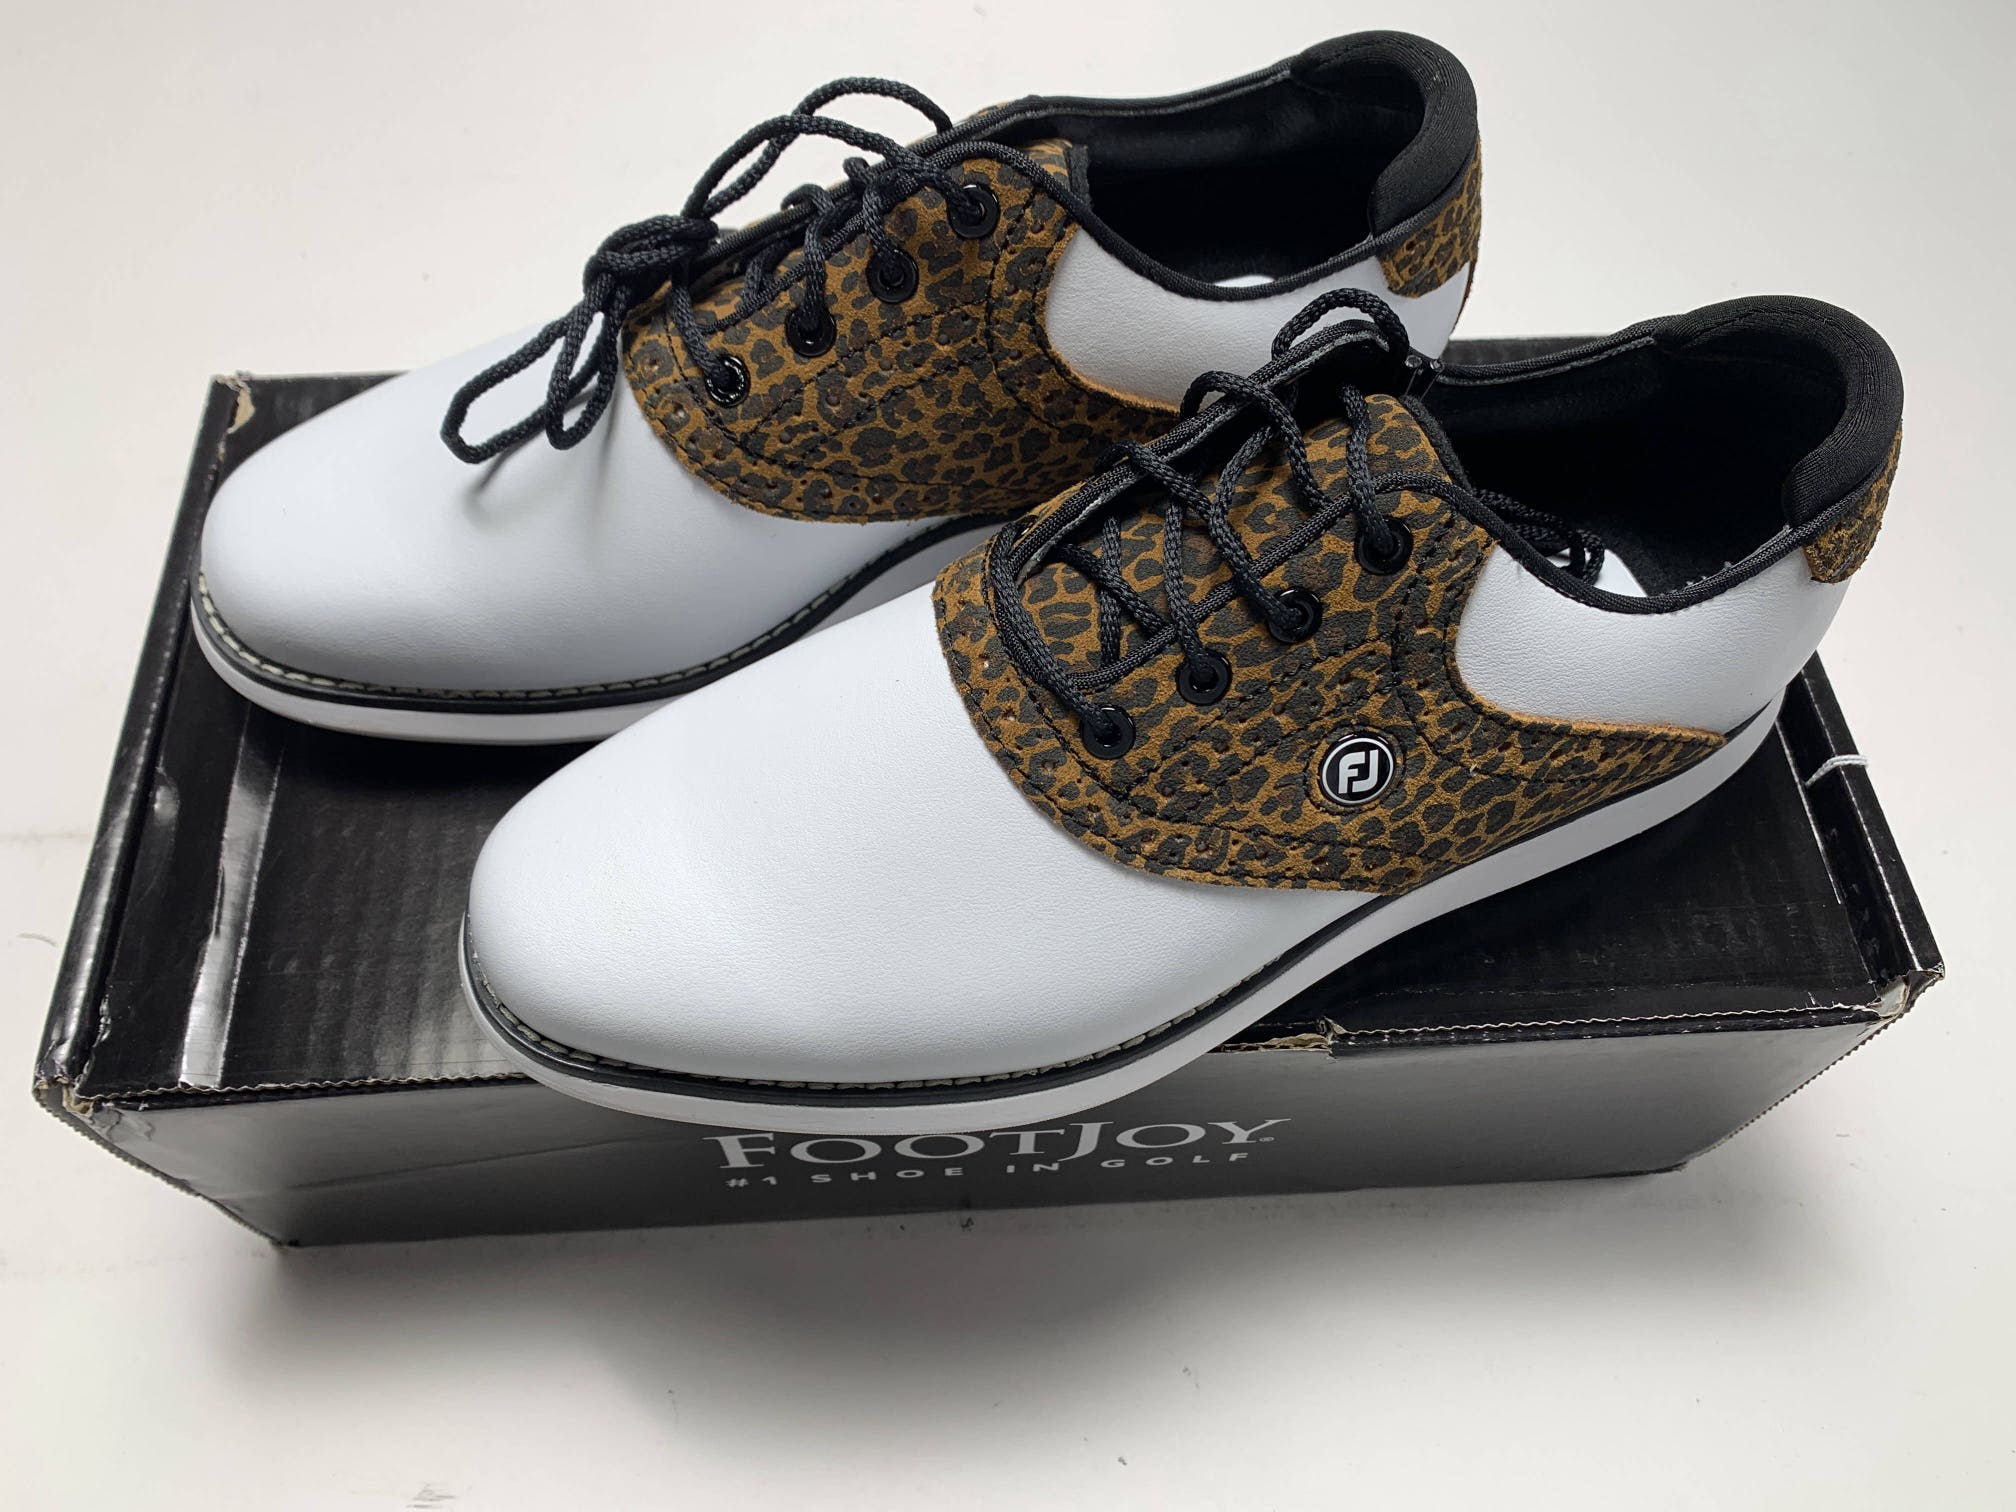 FootJoy FJ Traditions Golf Shoes White Brown Leopard Women's SZ 6.5 (97923)